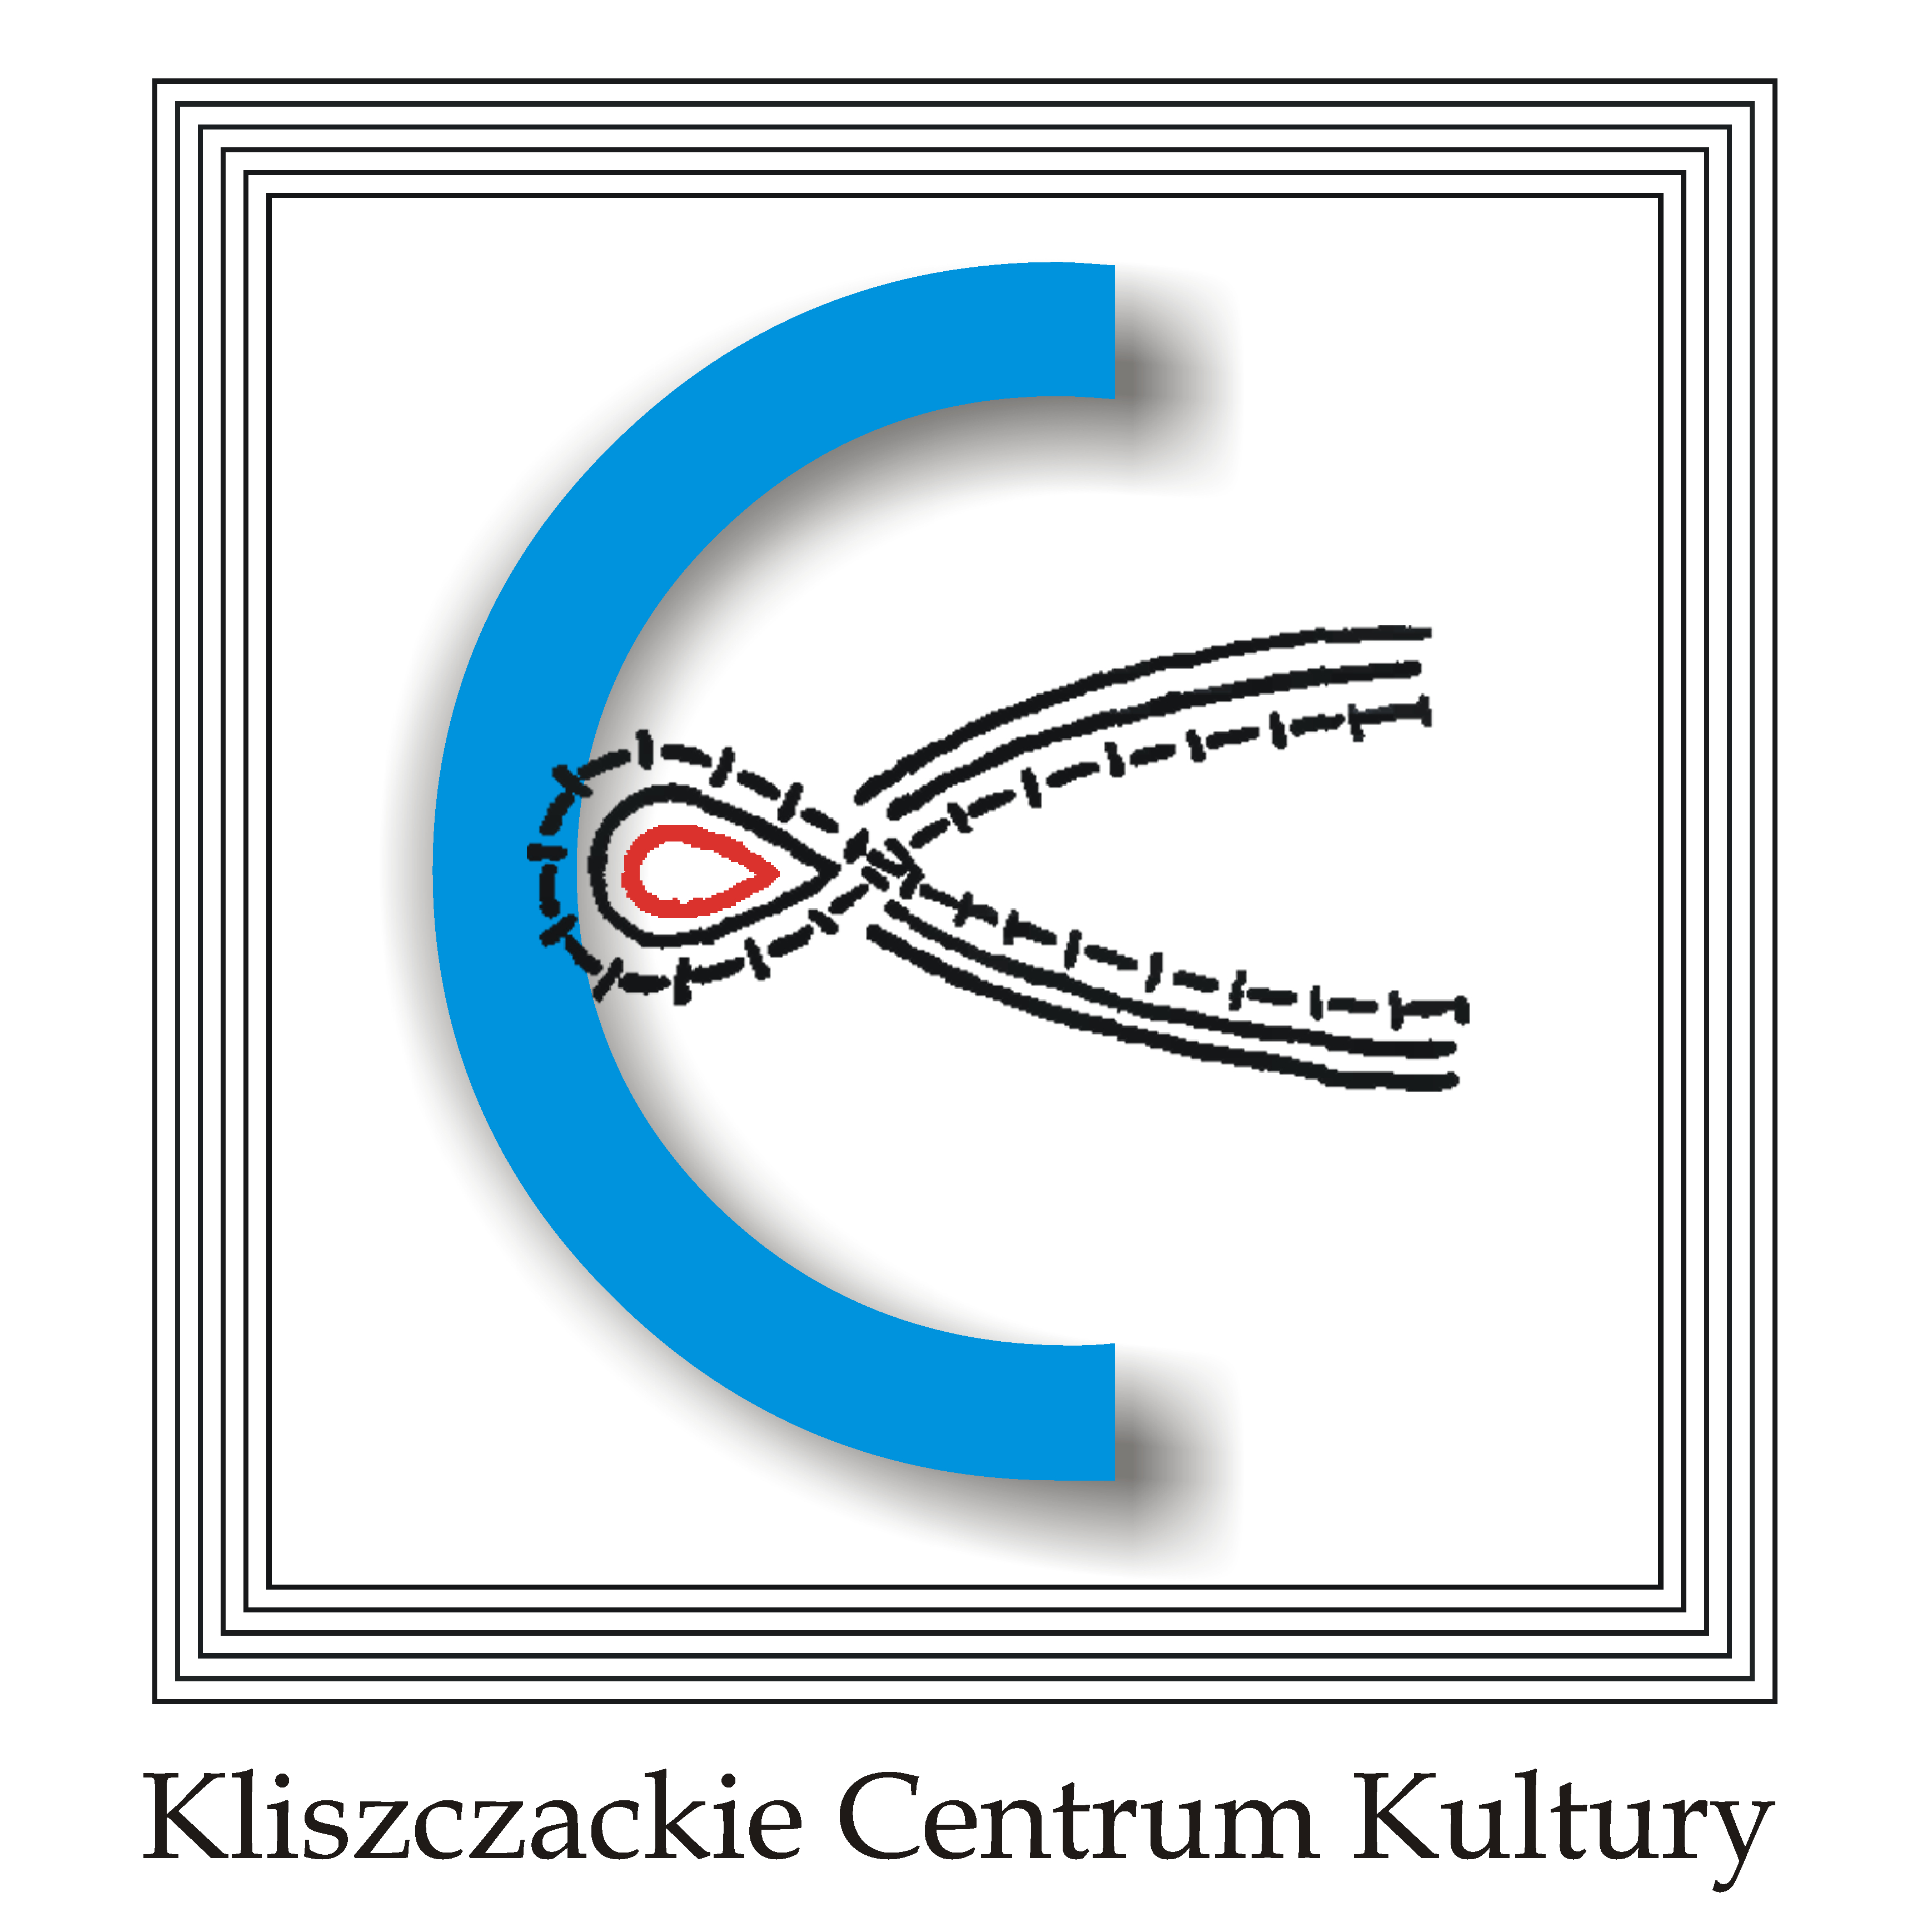 Kliszczackie Centrum Kultury